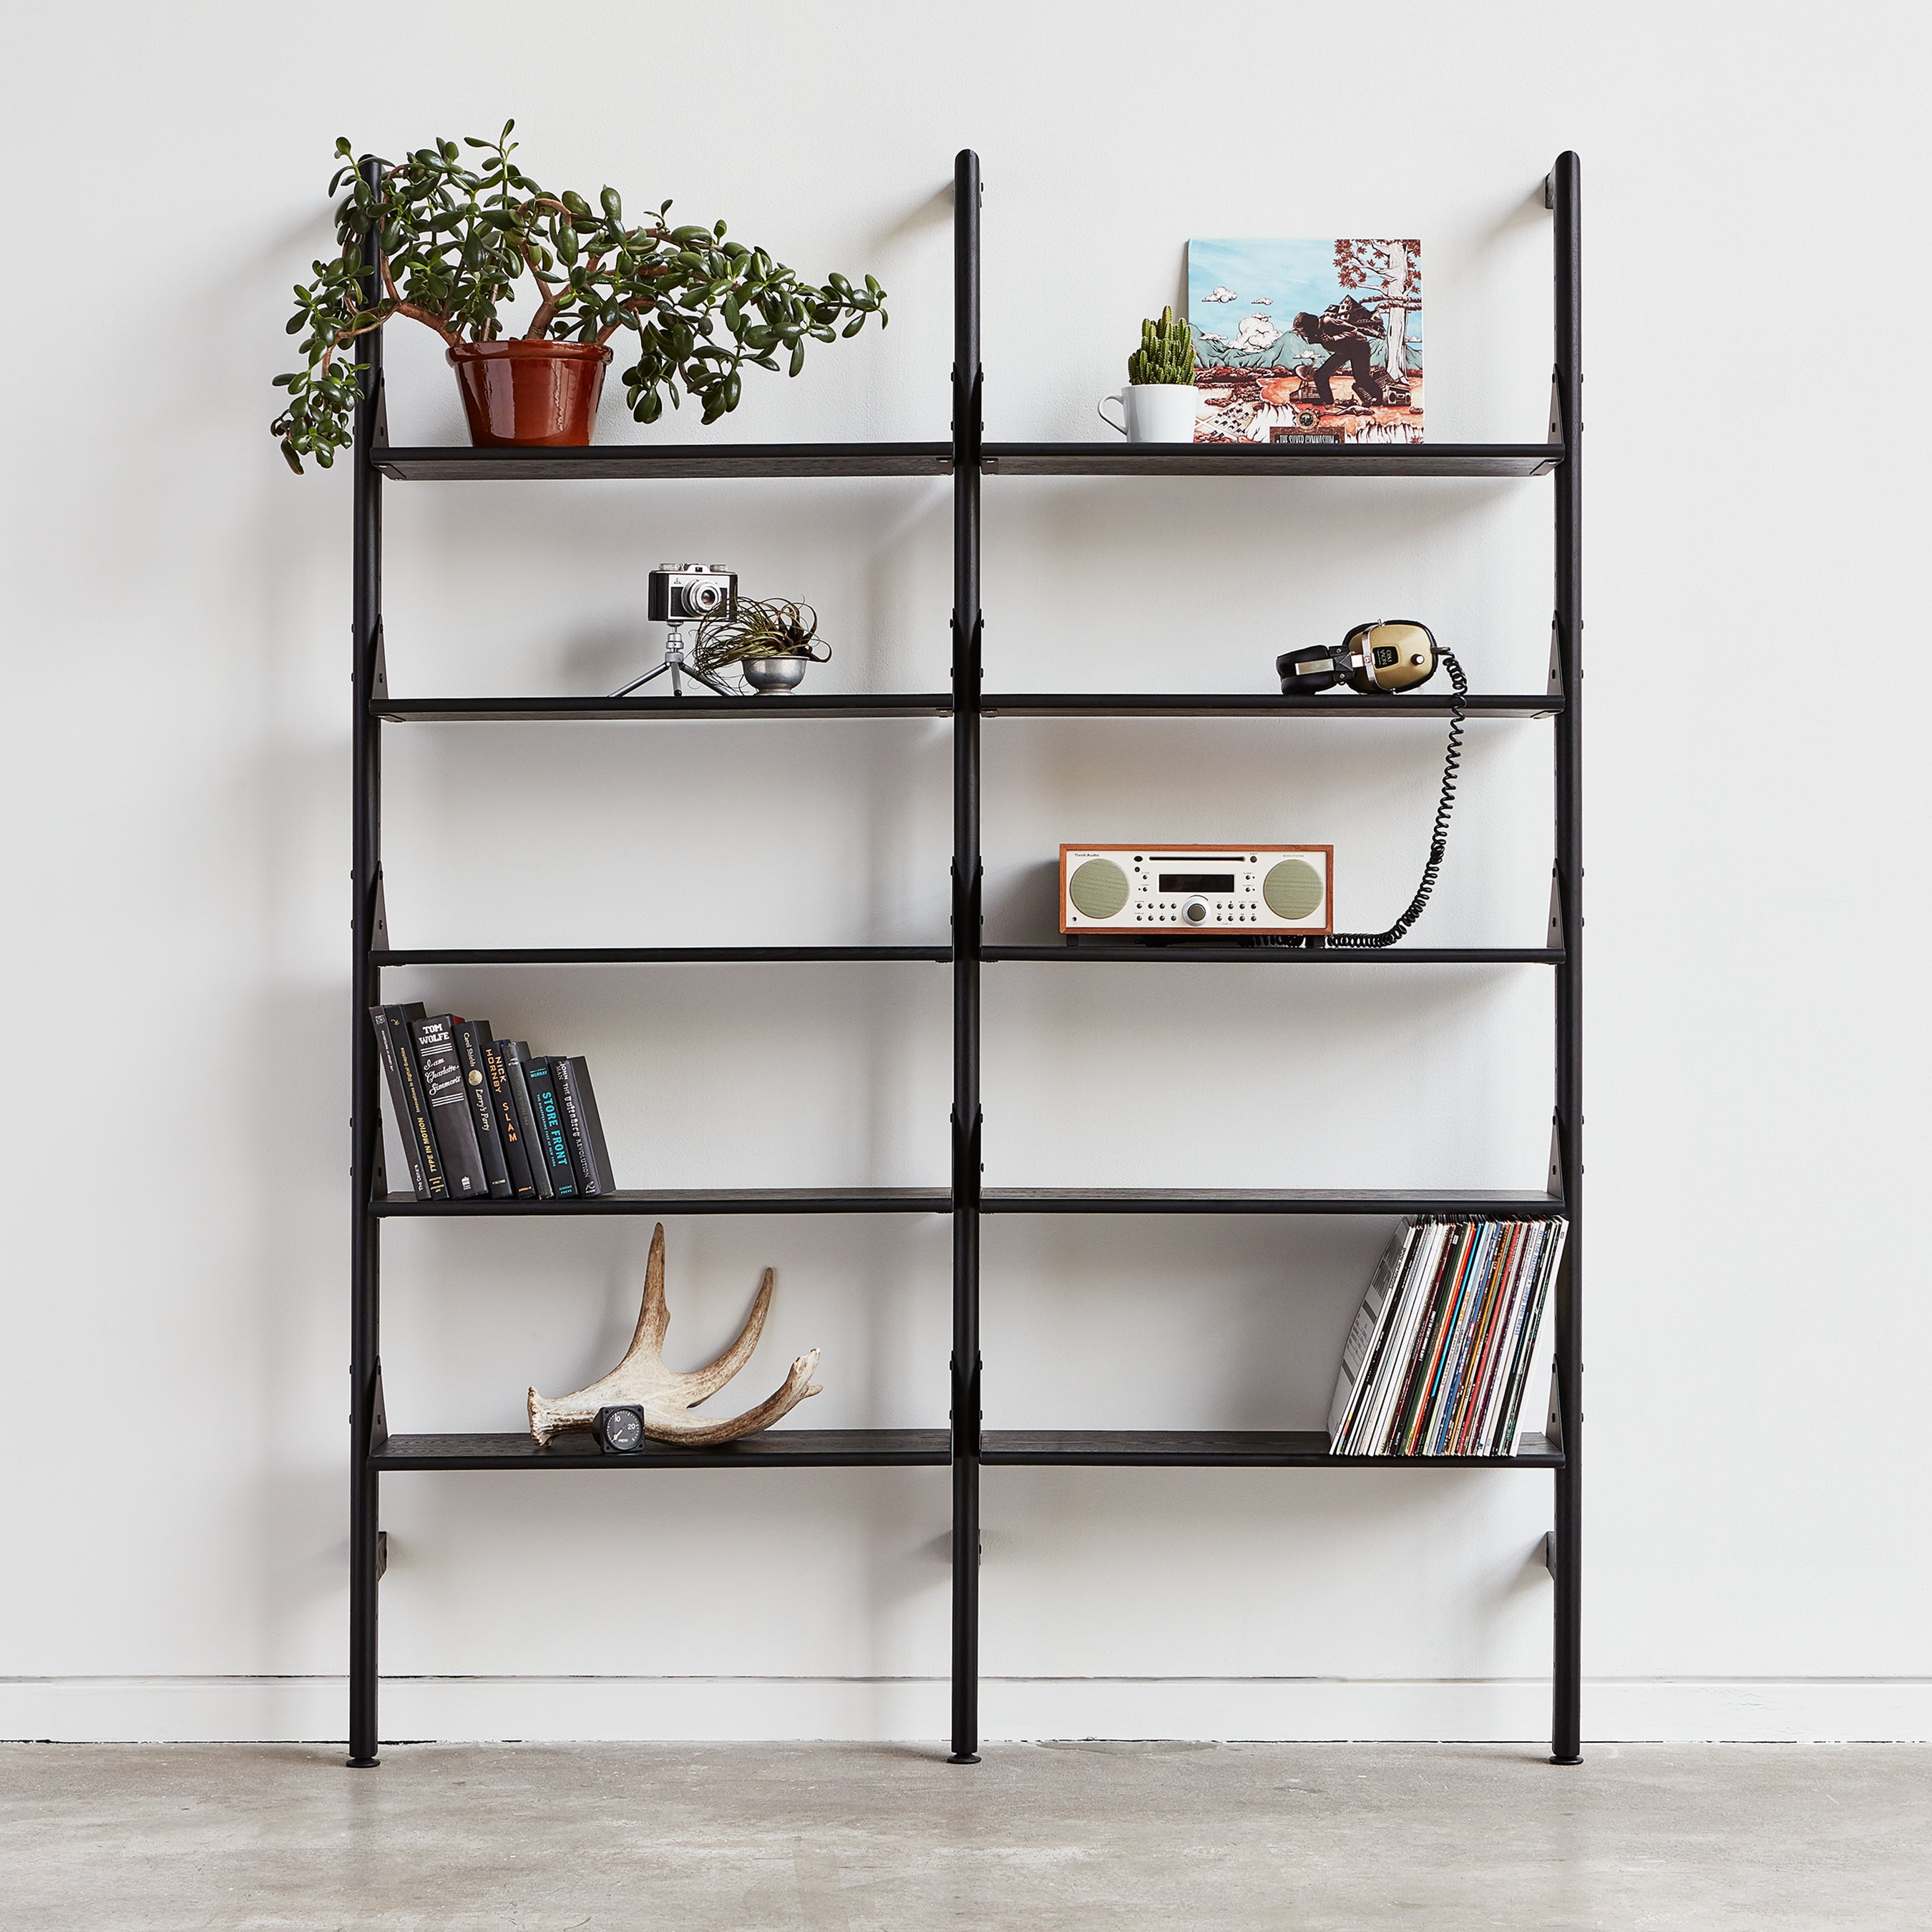 Two shelves